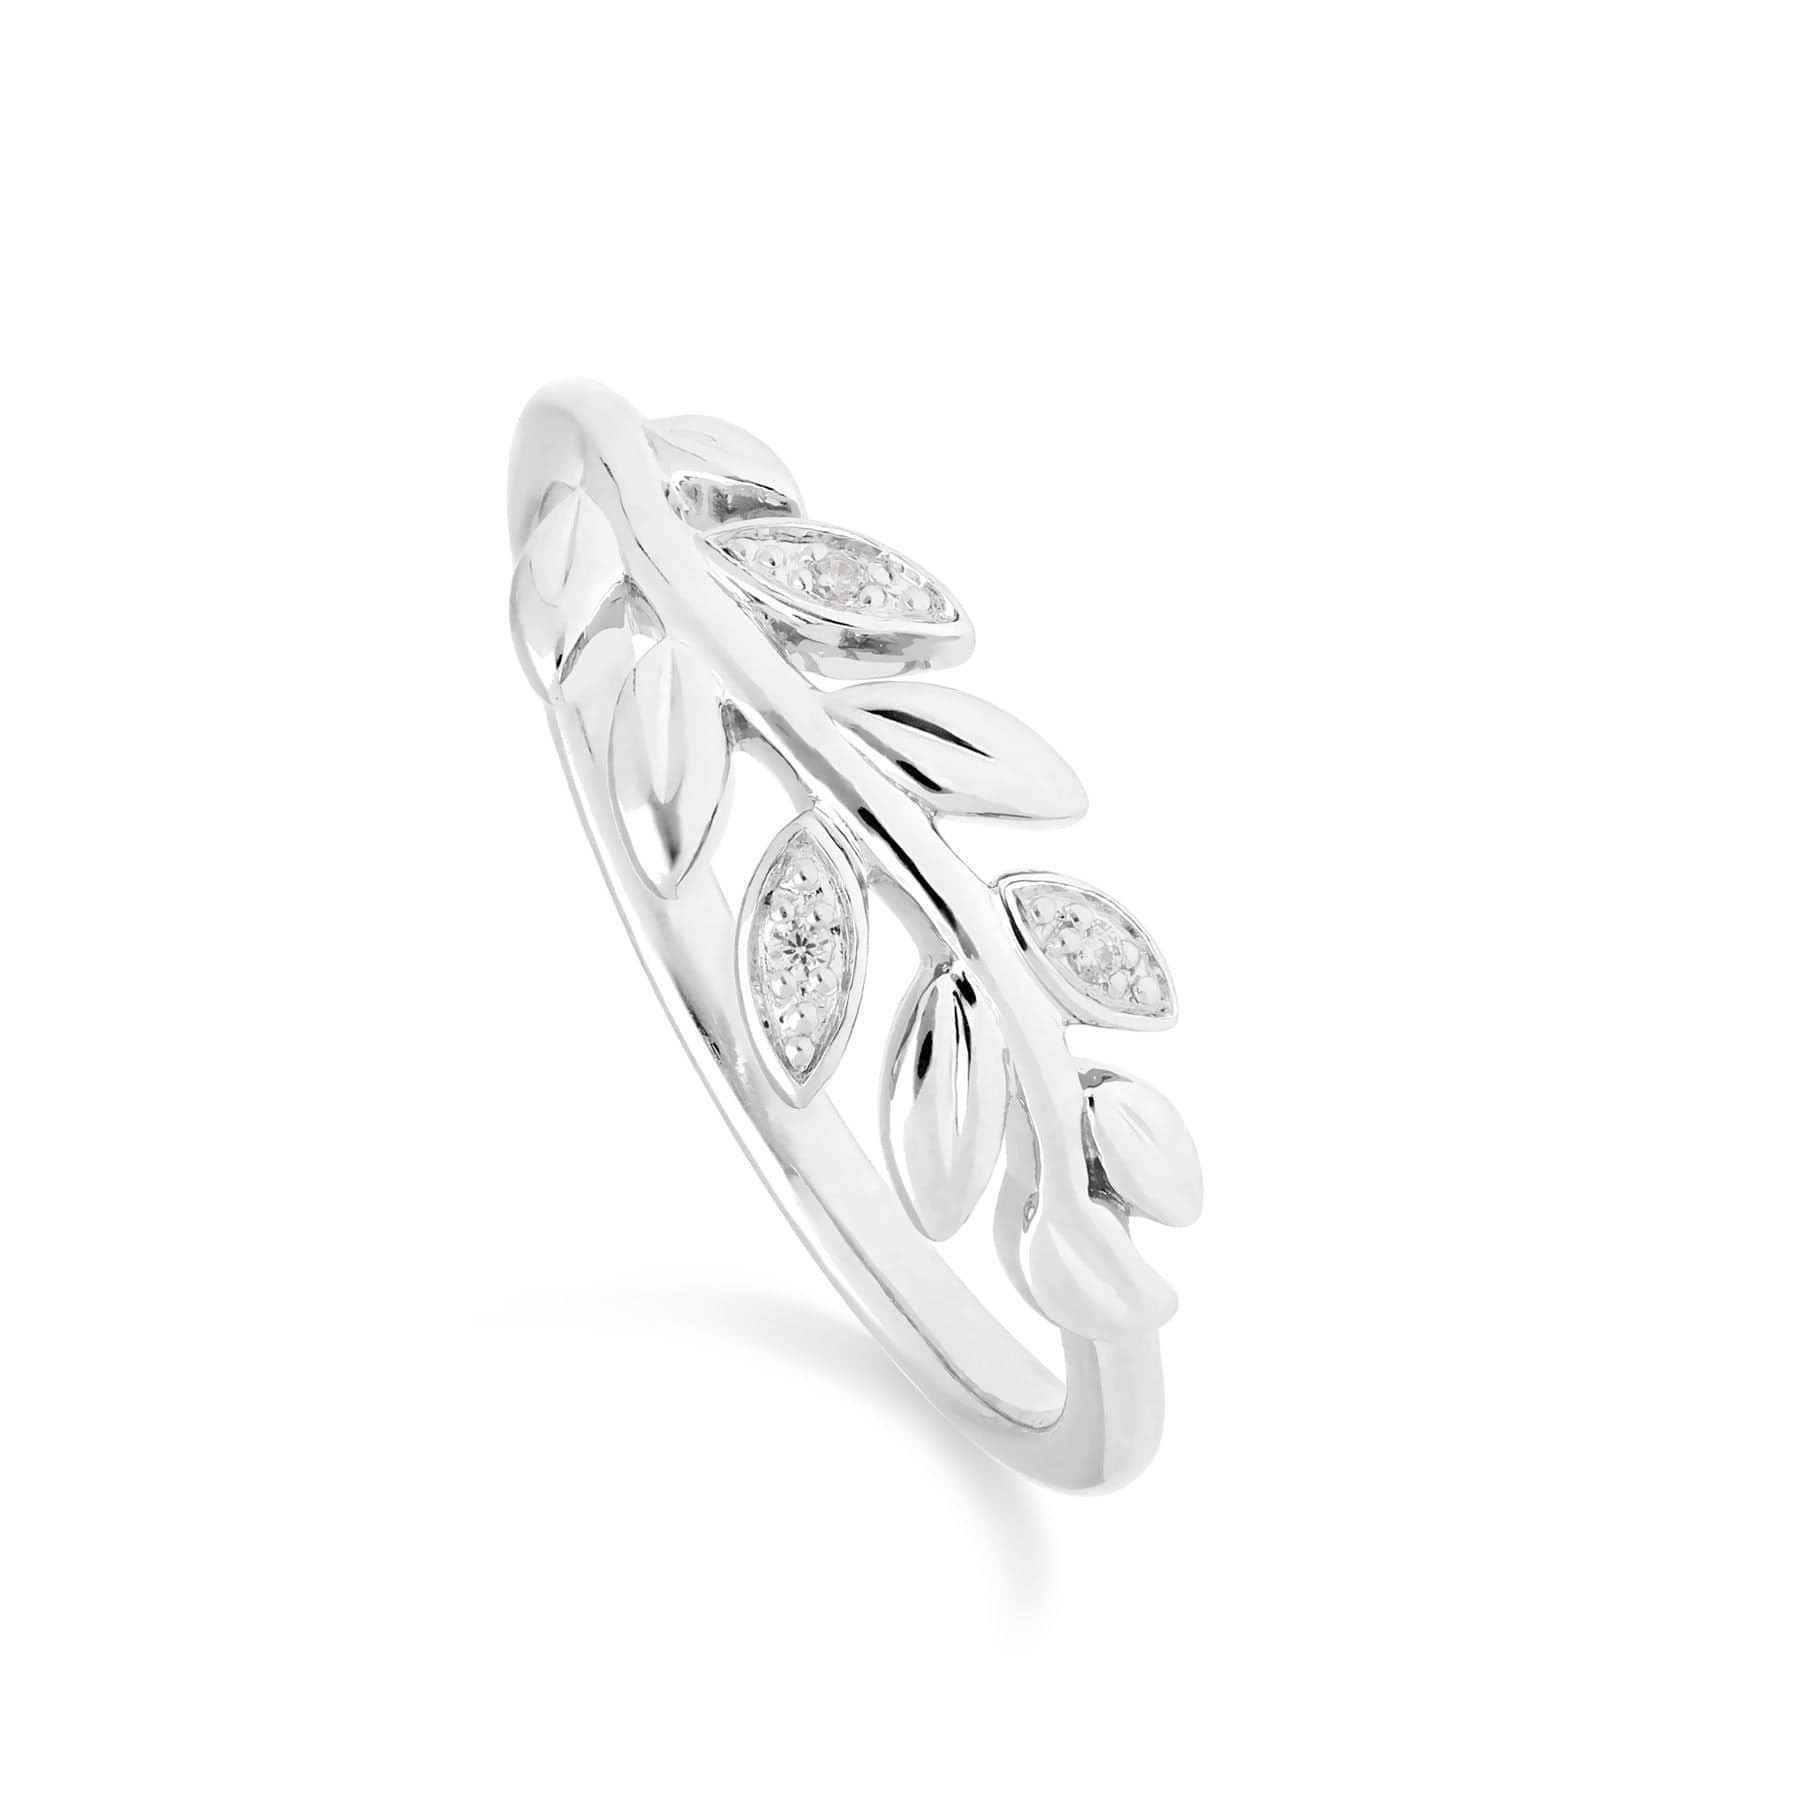 162E0273019-162R0397019 O Leaf Diamond Stud Earring & Ring Set in 9ct White Gold 3